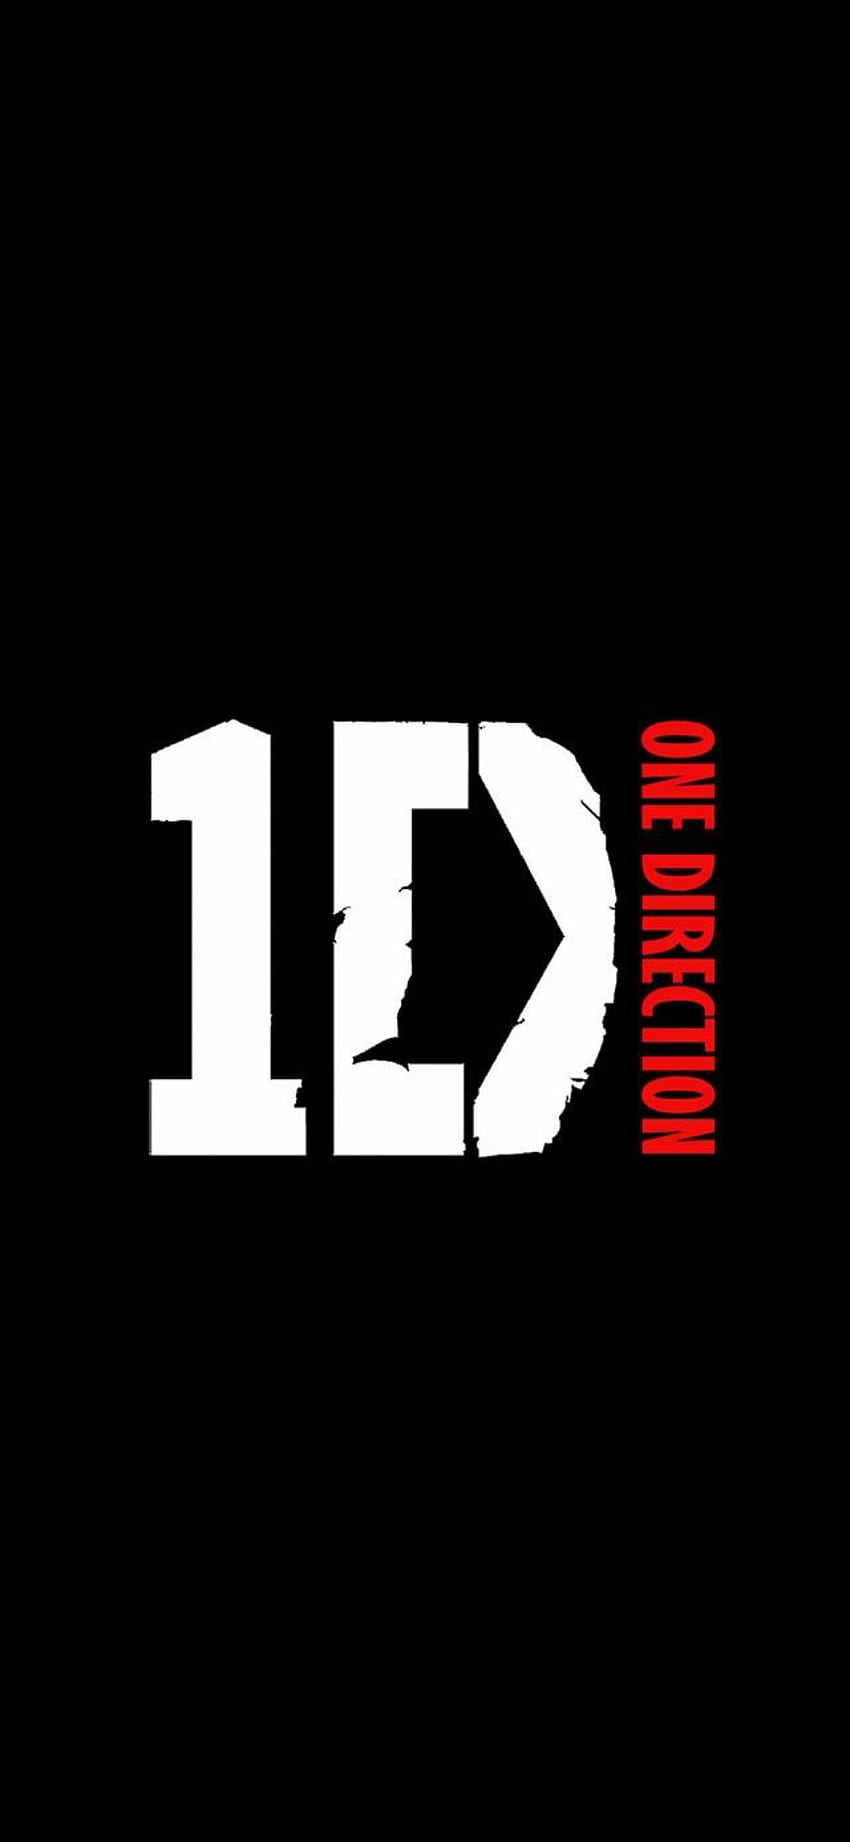 One Direction Logo 1D transparent PNG - StickPNG